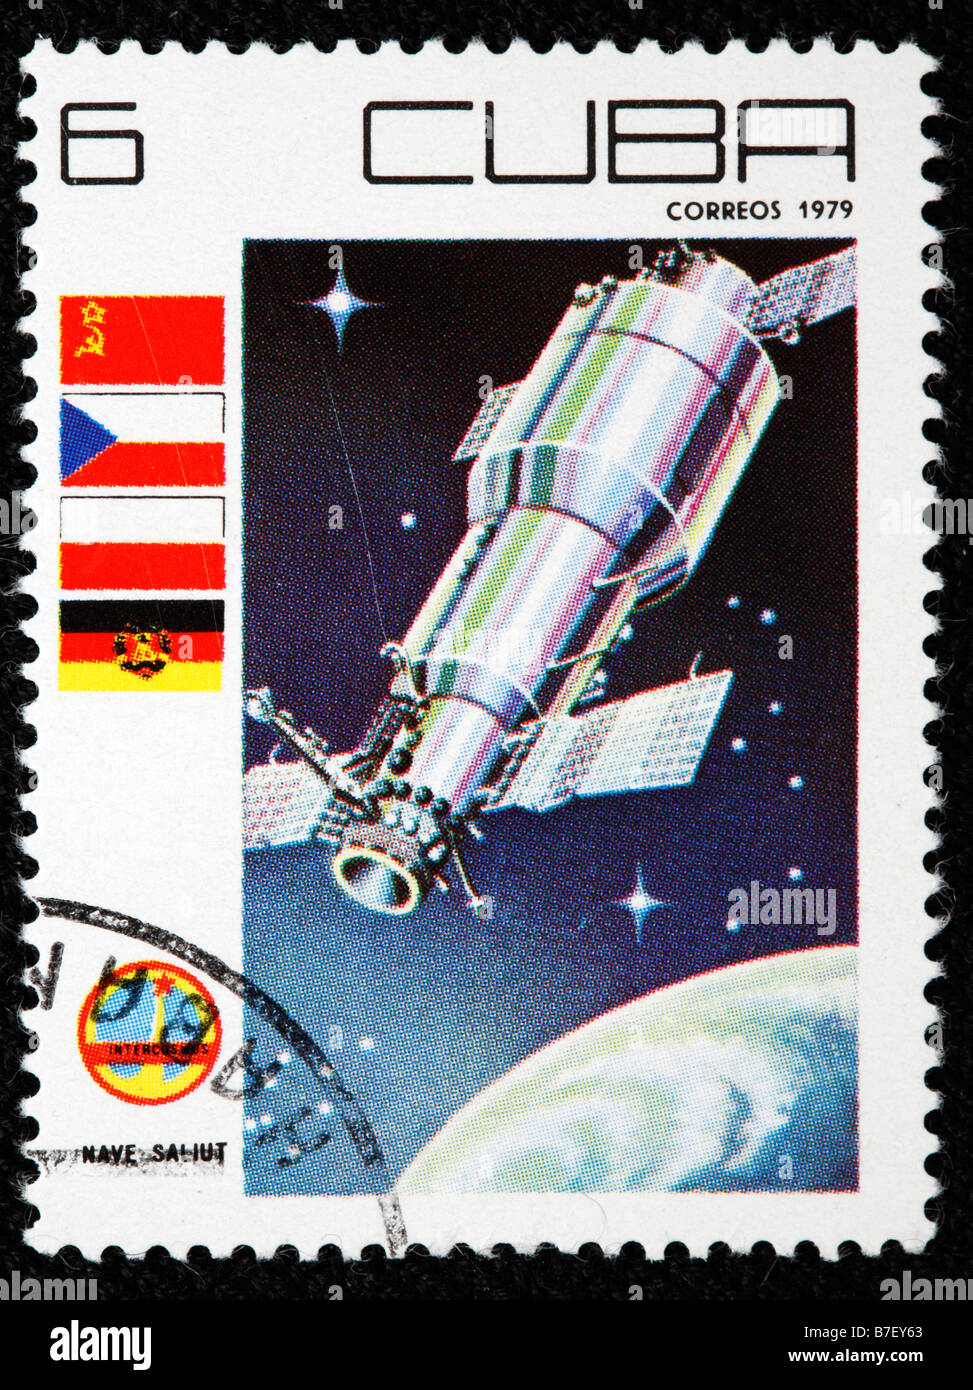 Sowjetischen Raum Orbitalstation "Salut", Briefmarke, Kuba, 1979 Stockfoto